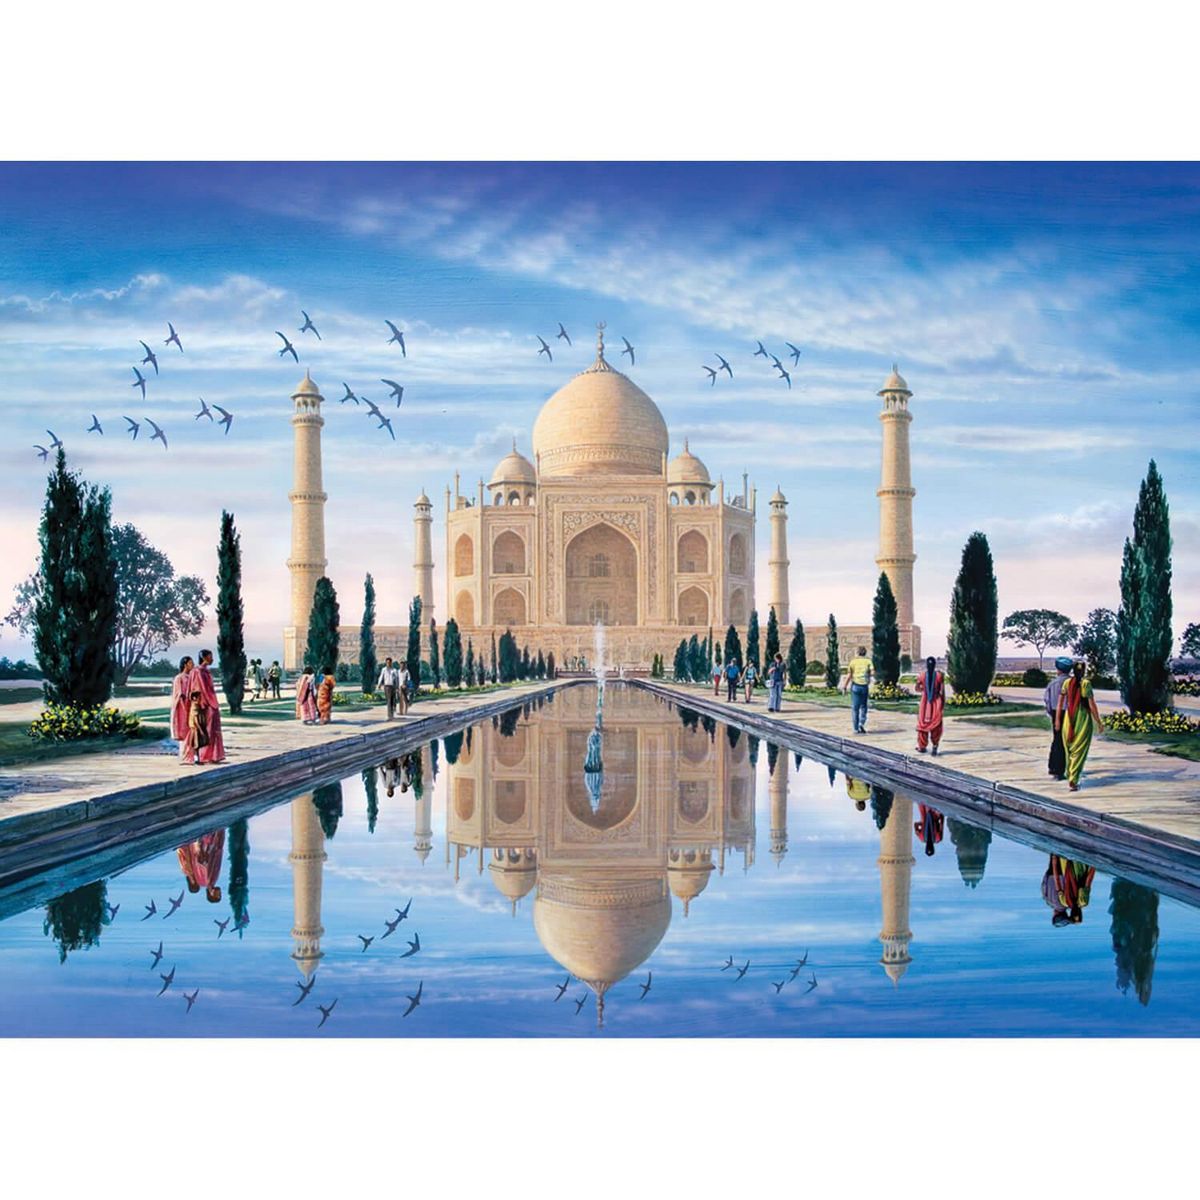 PERRE / ANATOLIAN Puzzle 1000 pièces : Taj Mahal